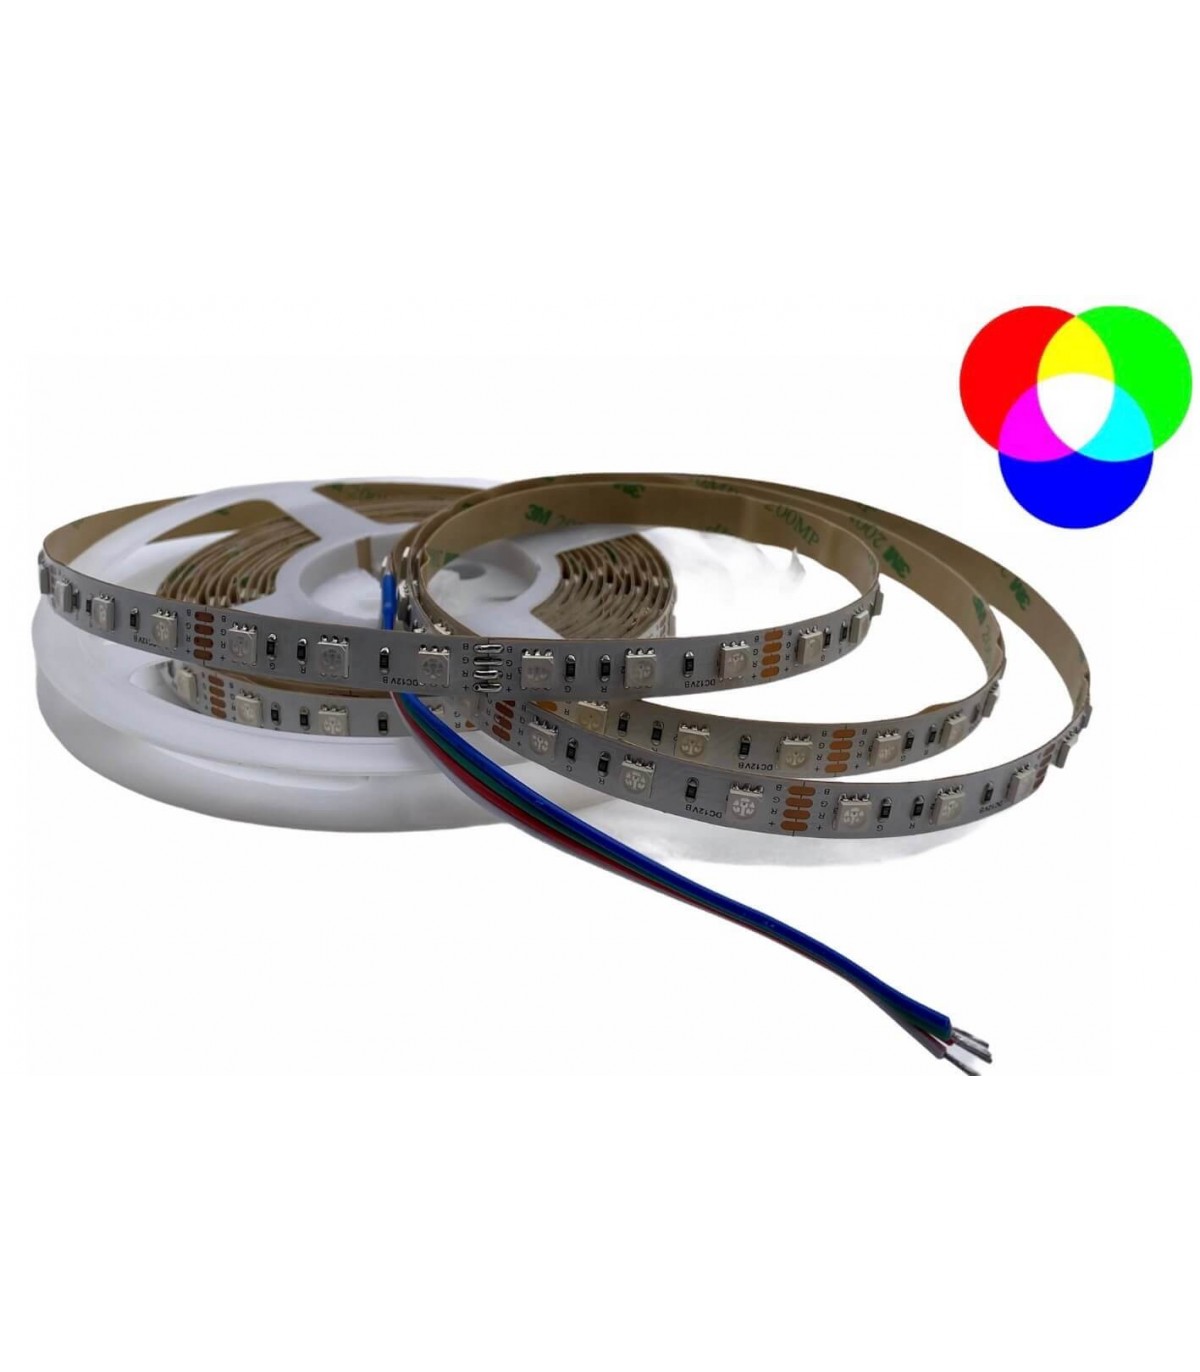 Ruban LED 12V basse tension – Bandeau LED 12V / Bande LED 12V